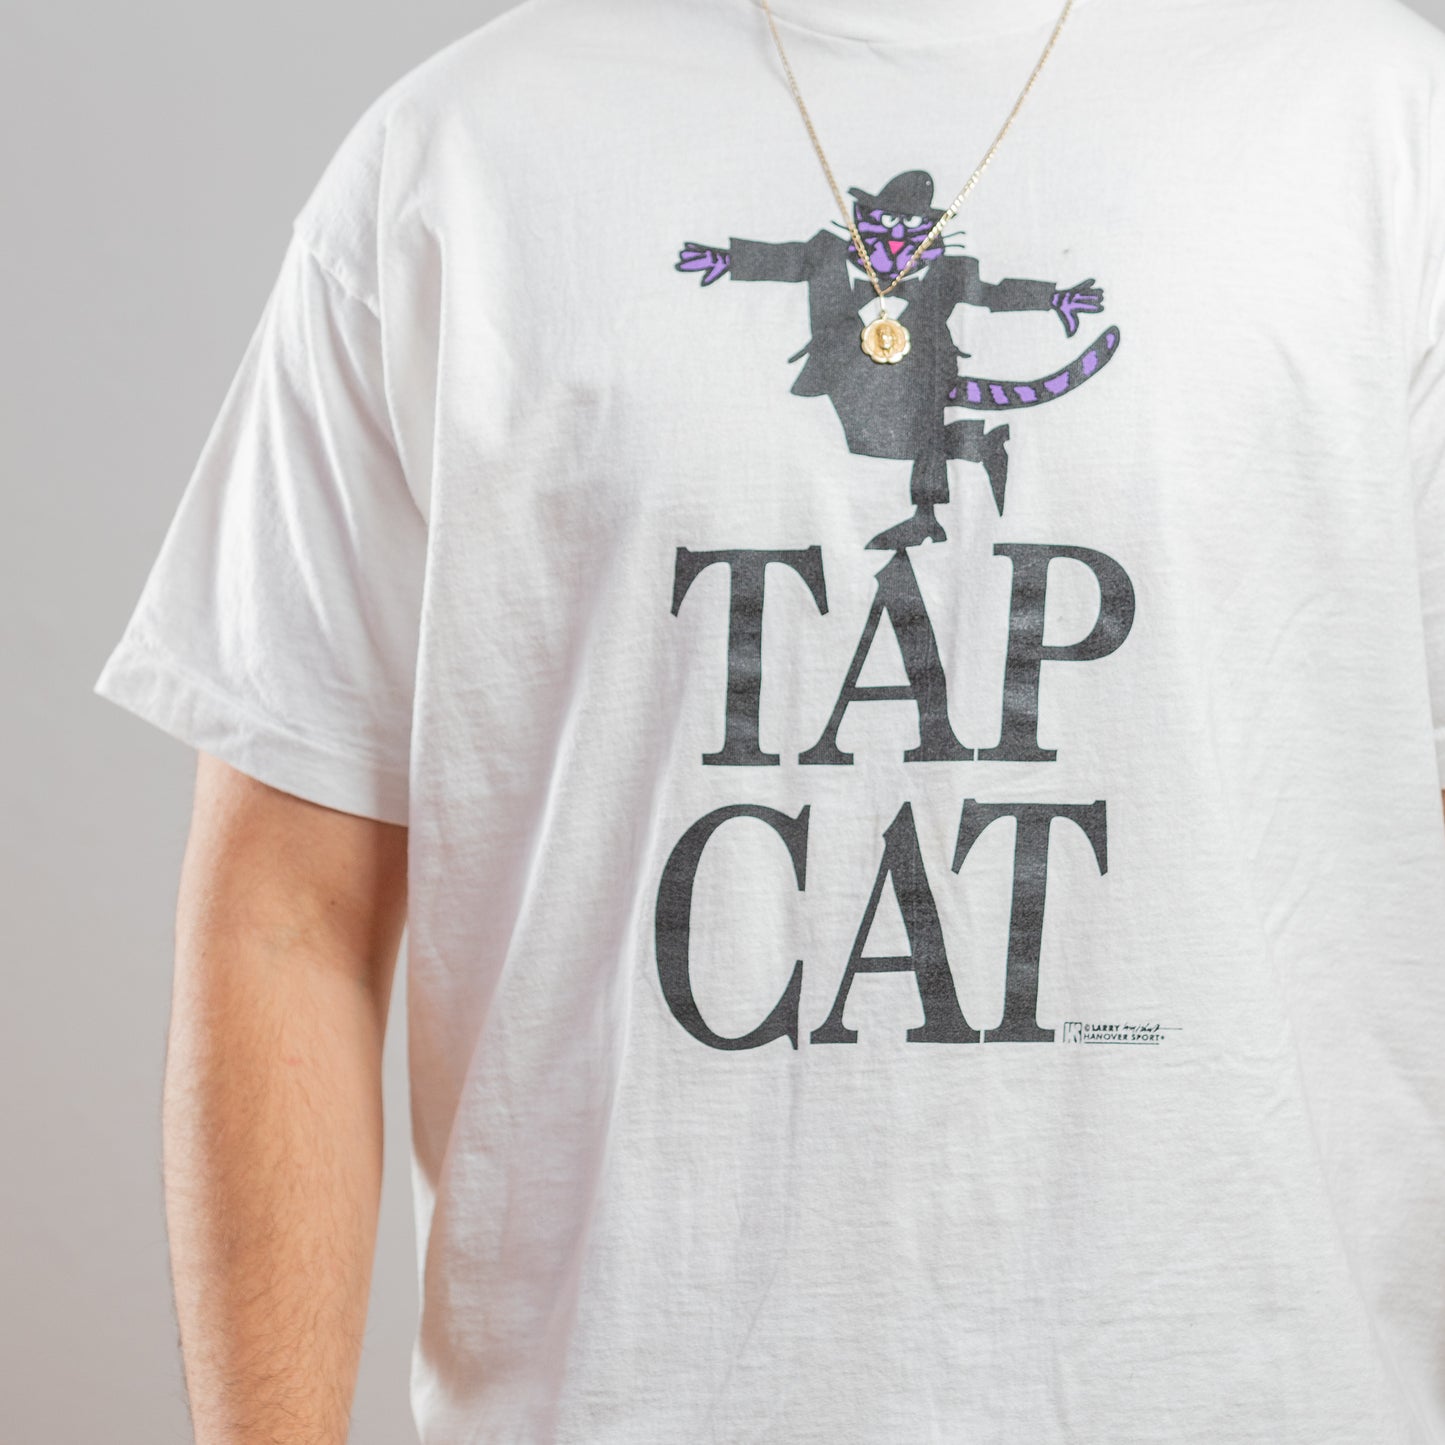 90s Tap Cat Tee